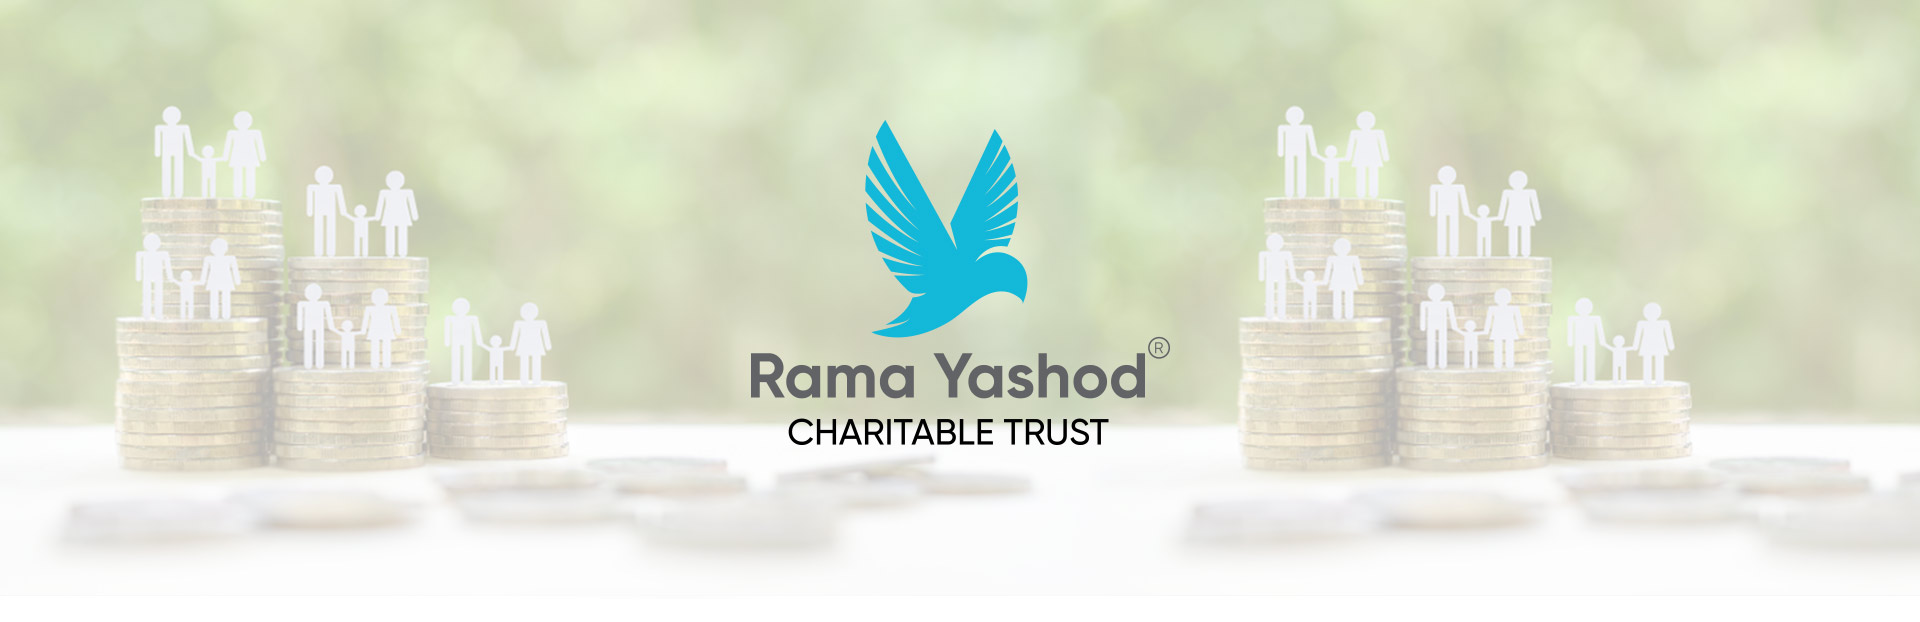 Rama Yashod Charitable Trust